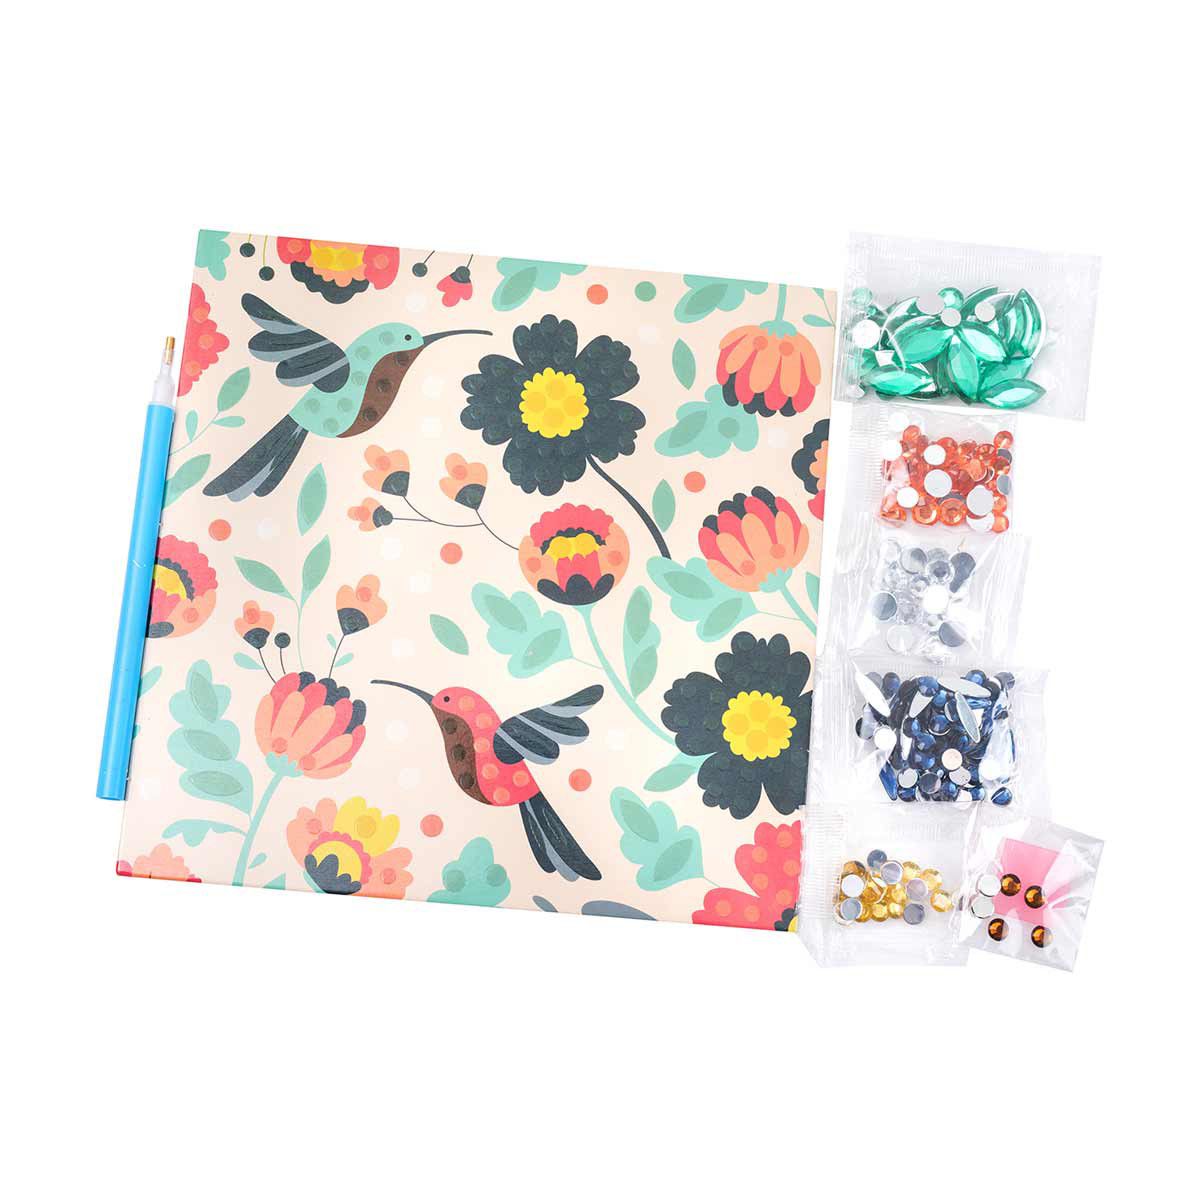 American Crafts 'Flowers' Gem Craft Kit, 7 in x 7 in